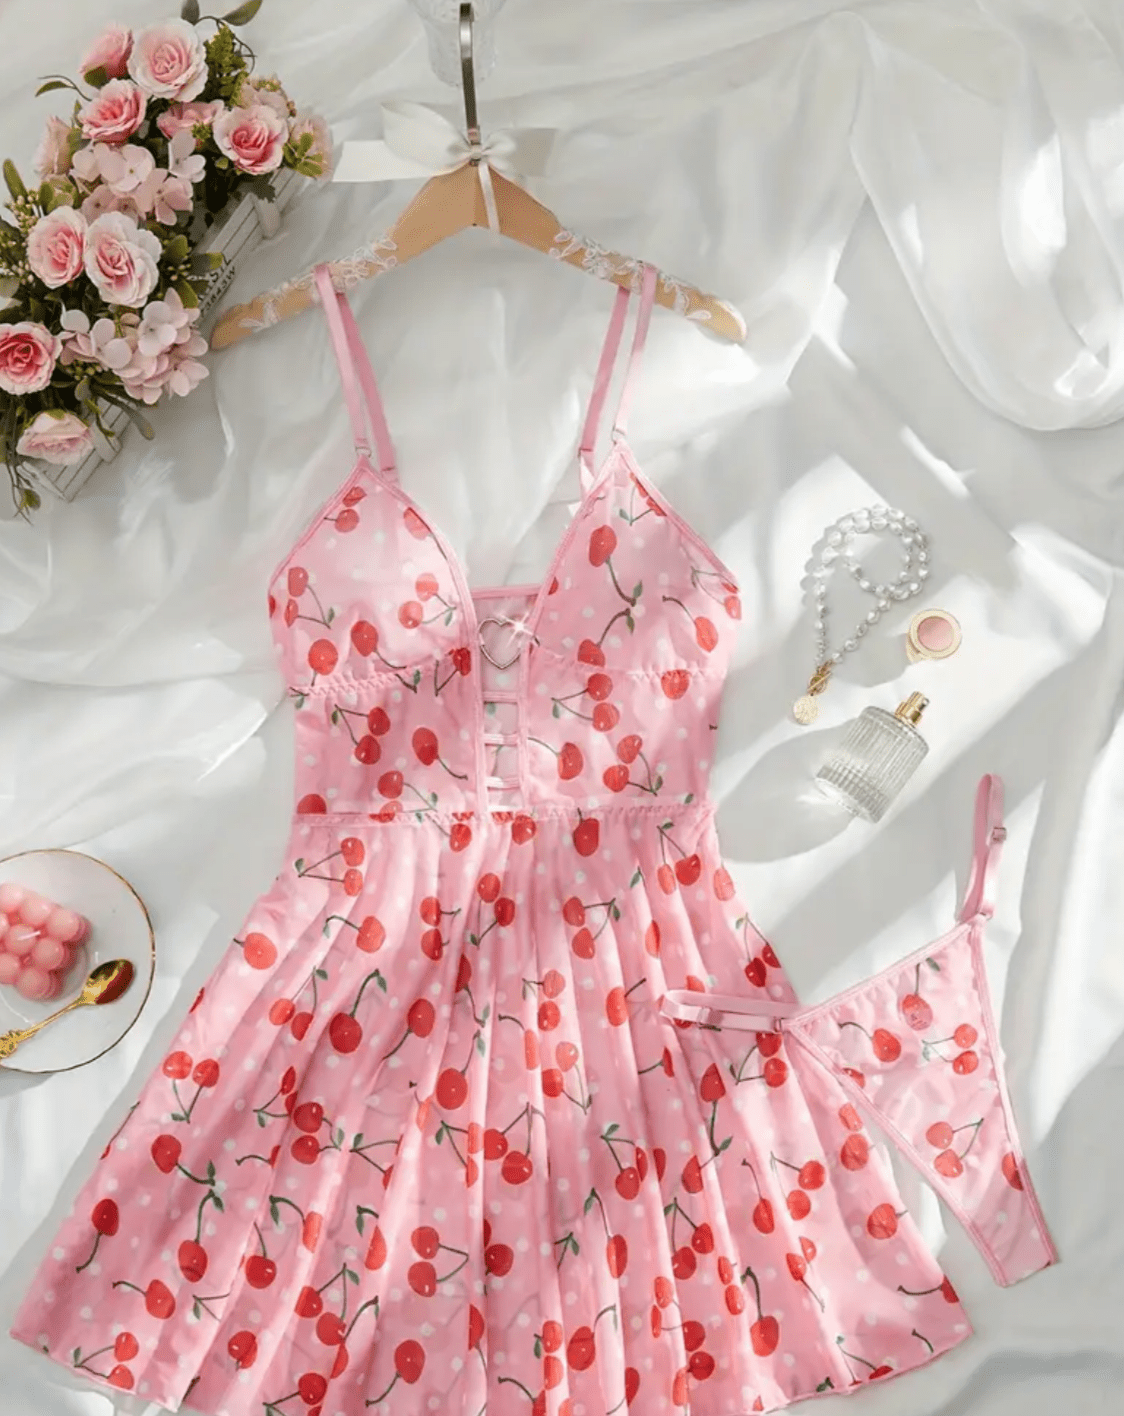 soft pink lingerie dress slip